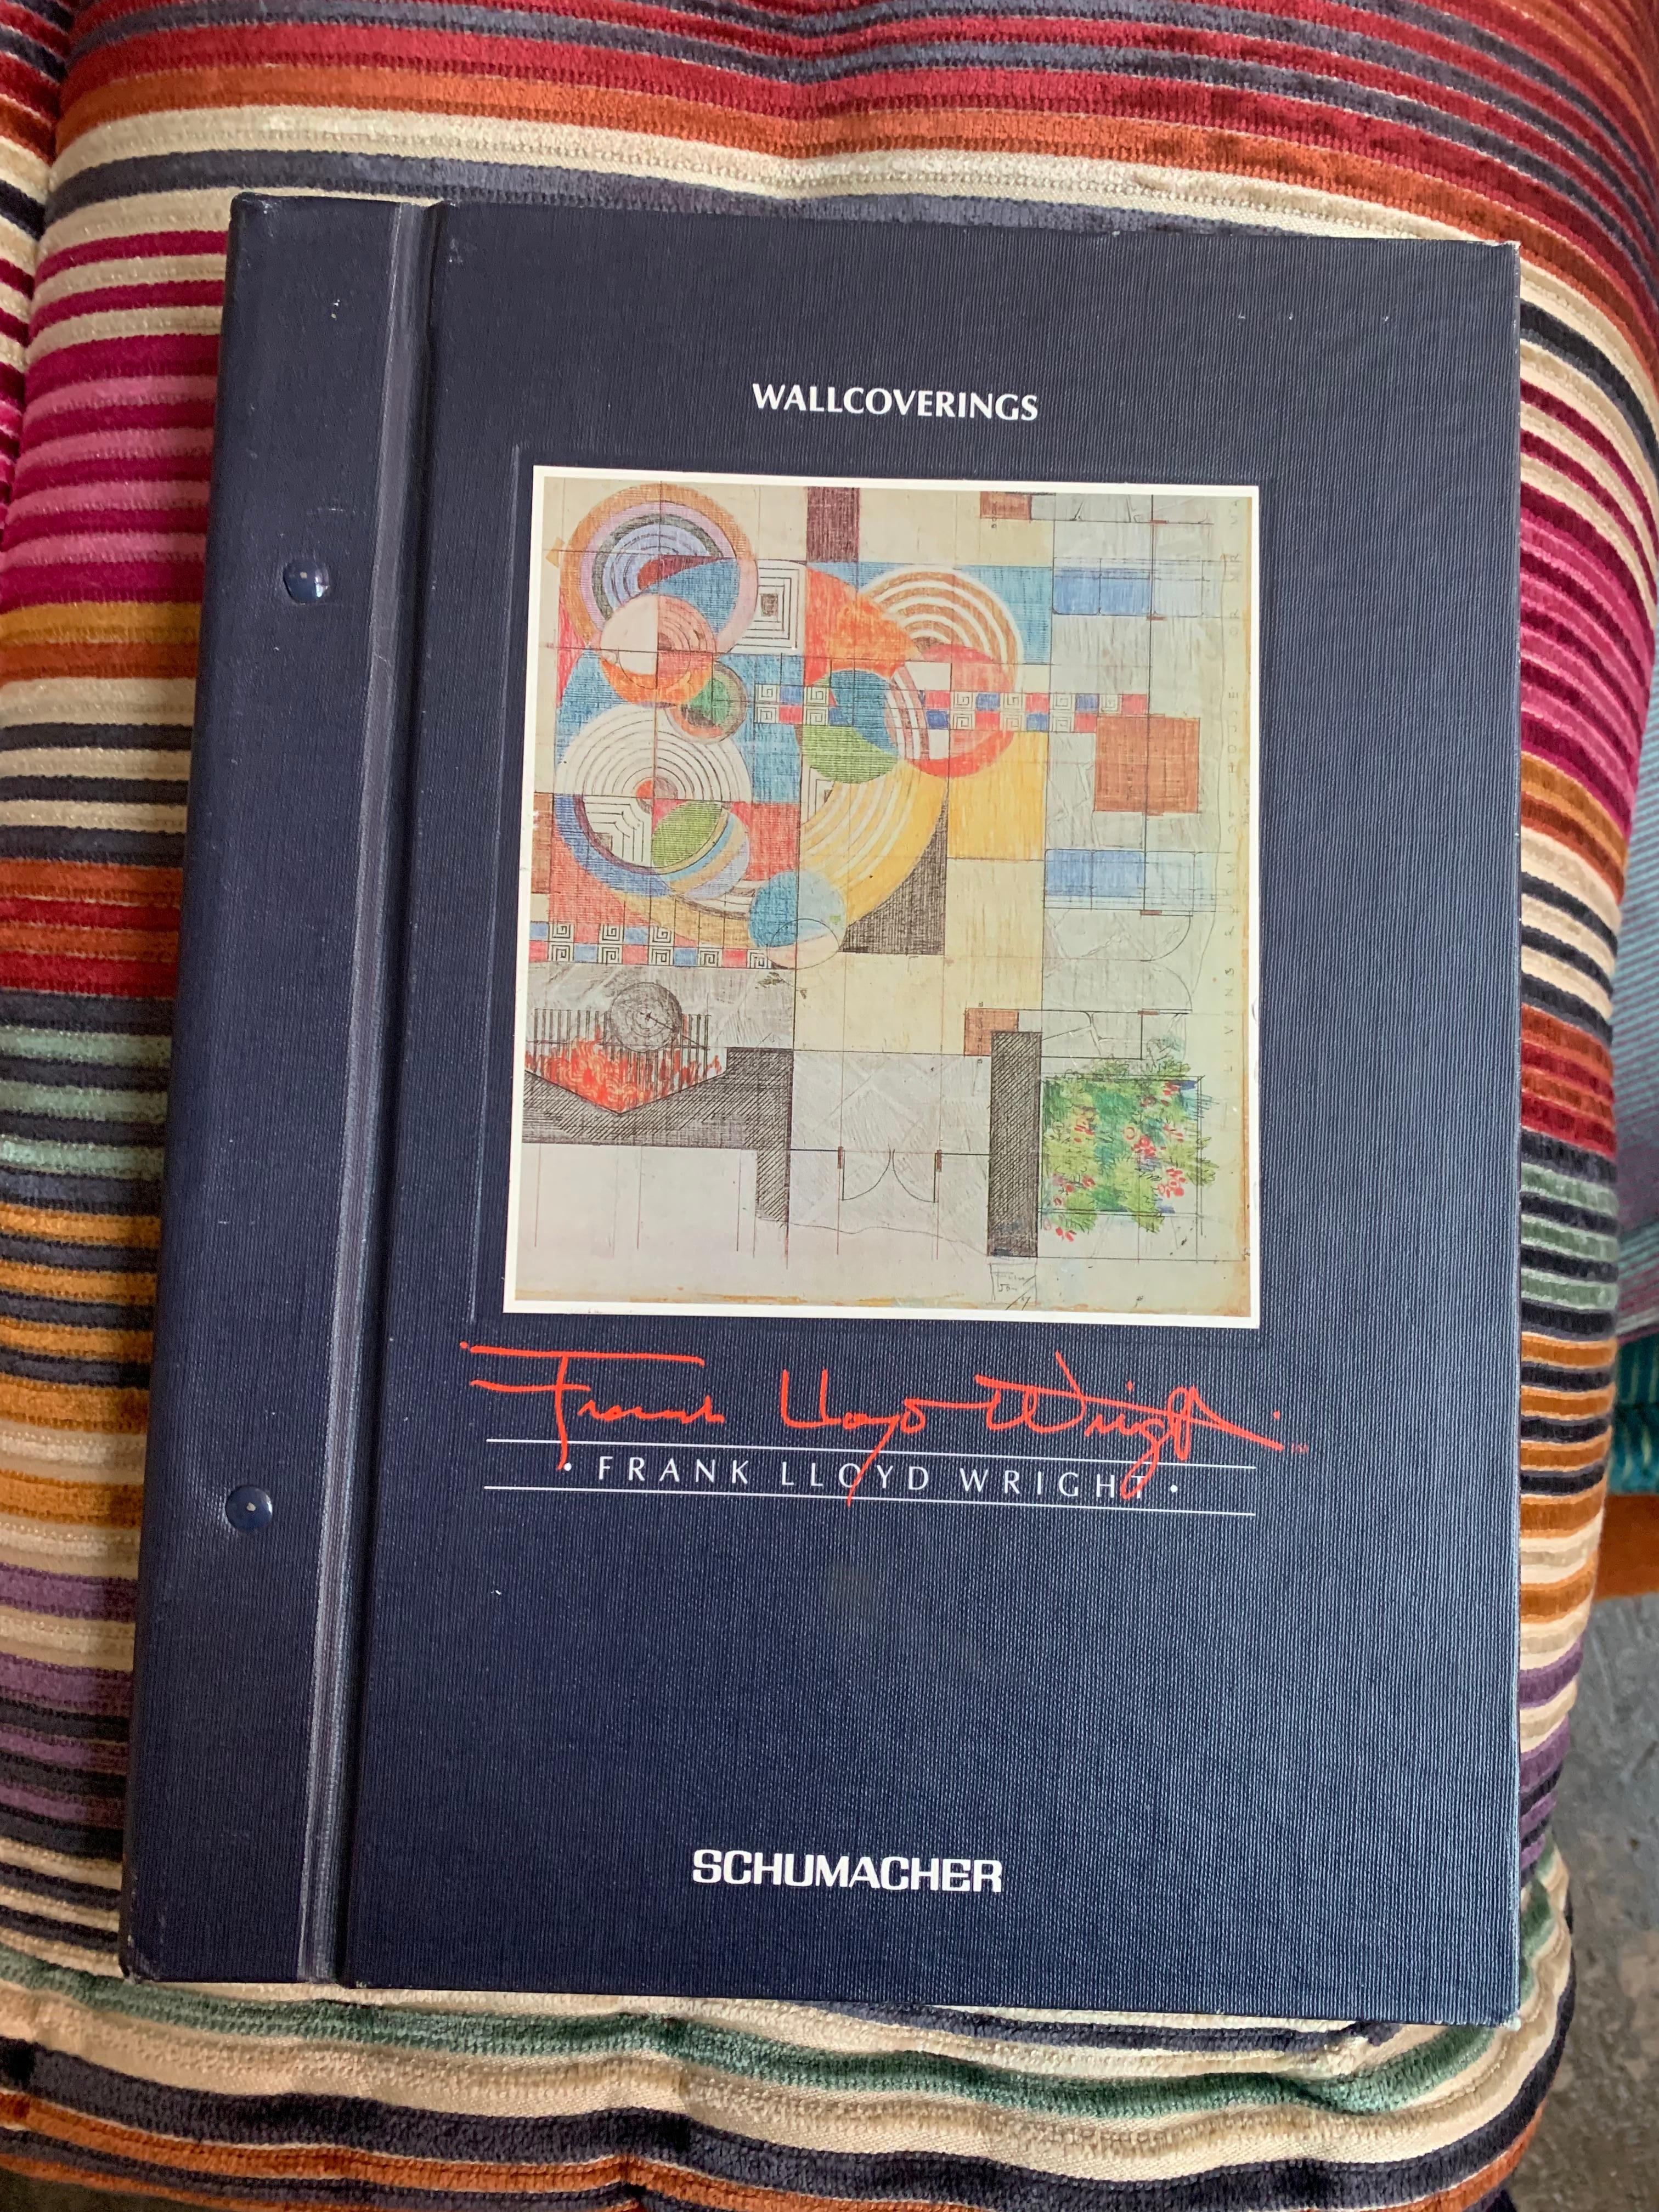 Frank Lloyd Wright interior design book published by Schumacher, 